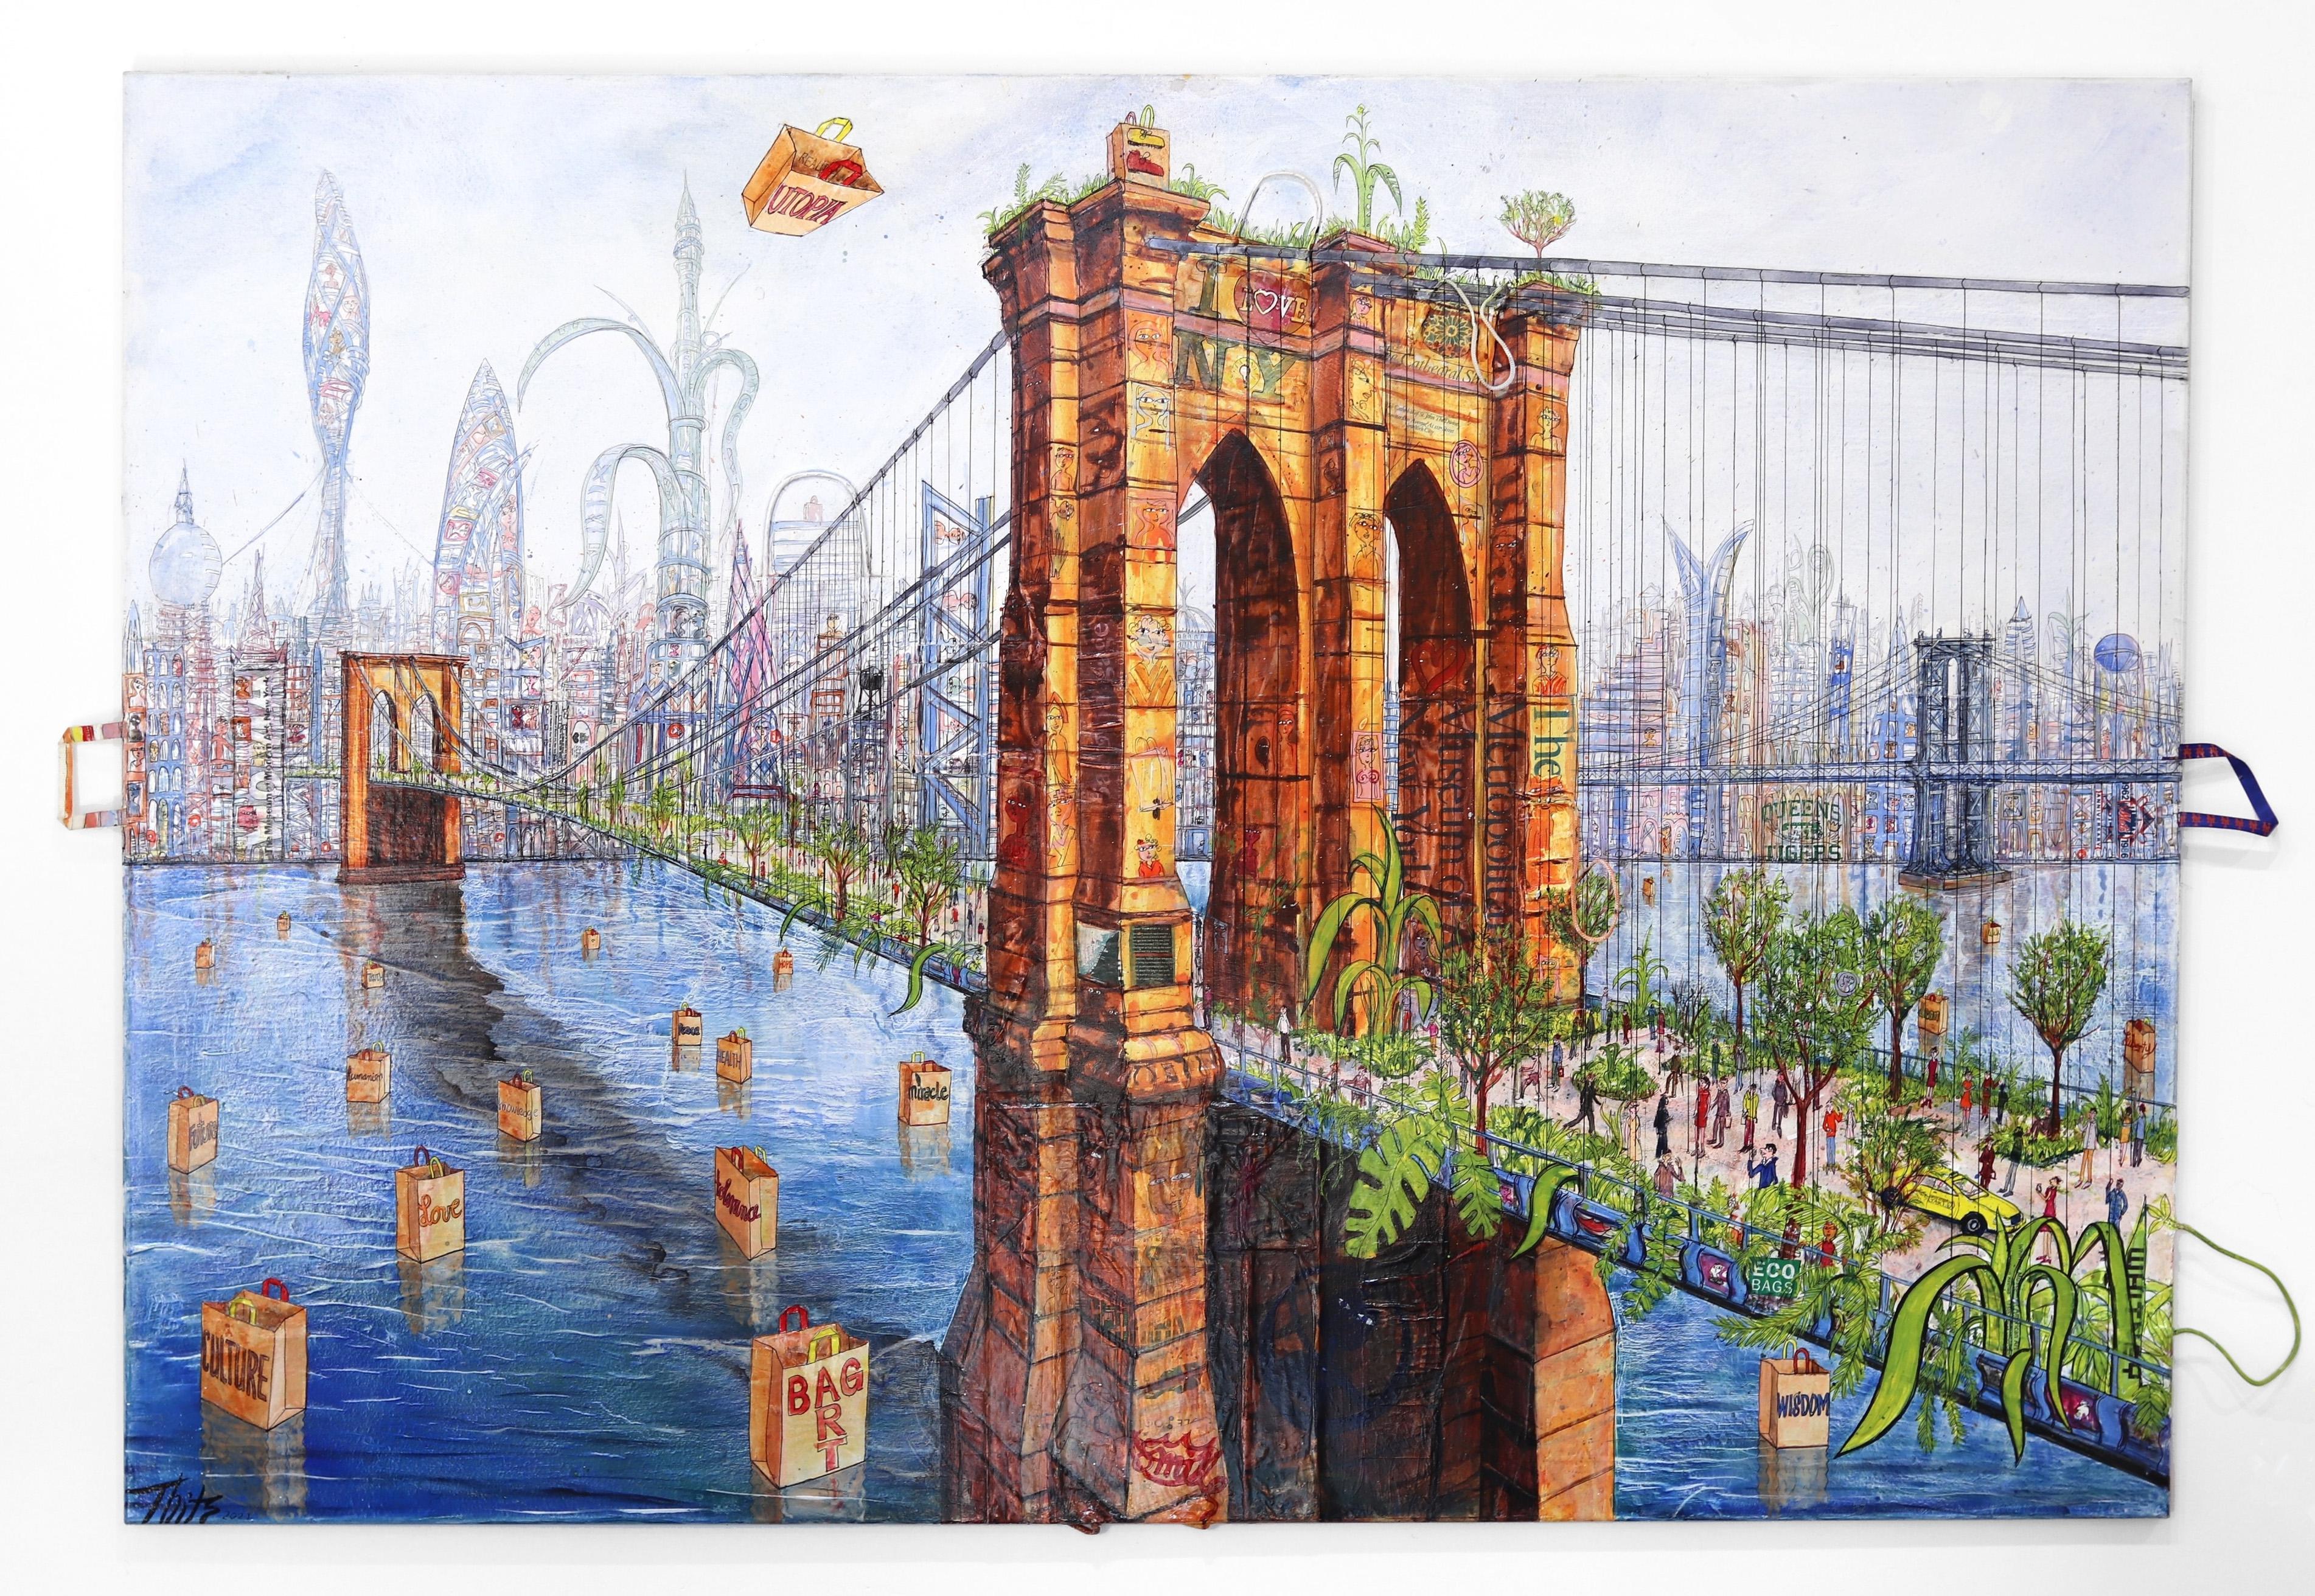 New York Utopia on Brooklyn Bridge  - Large Oversized Colorful Original Artwork - Mixed Media Art by Thitz